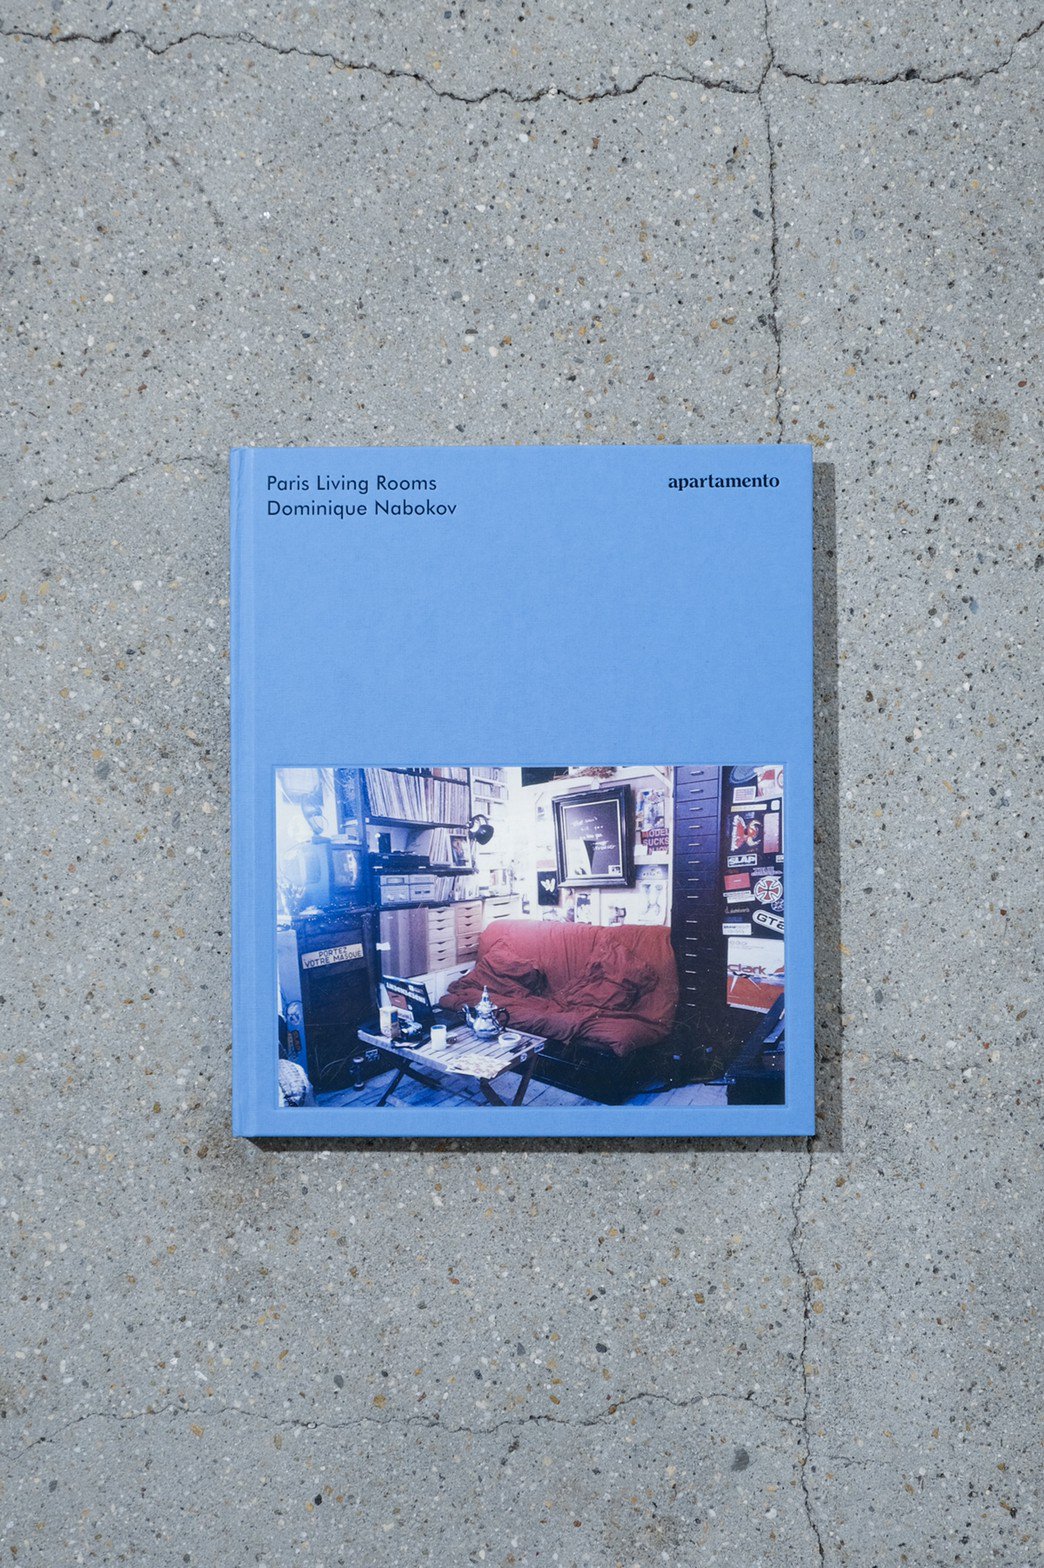 『PARIS LIVING ROOMS』by Dominique Nabokov